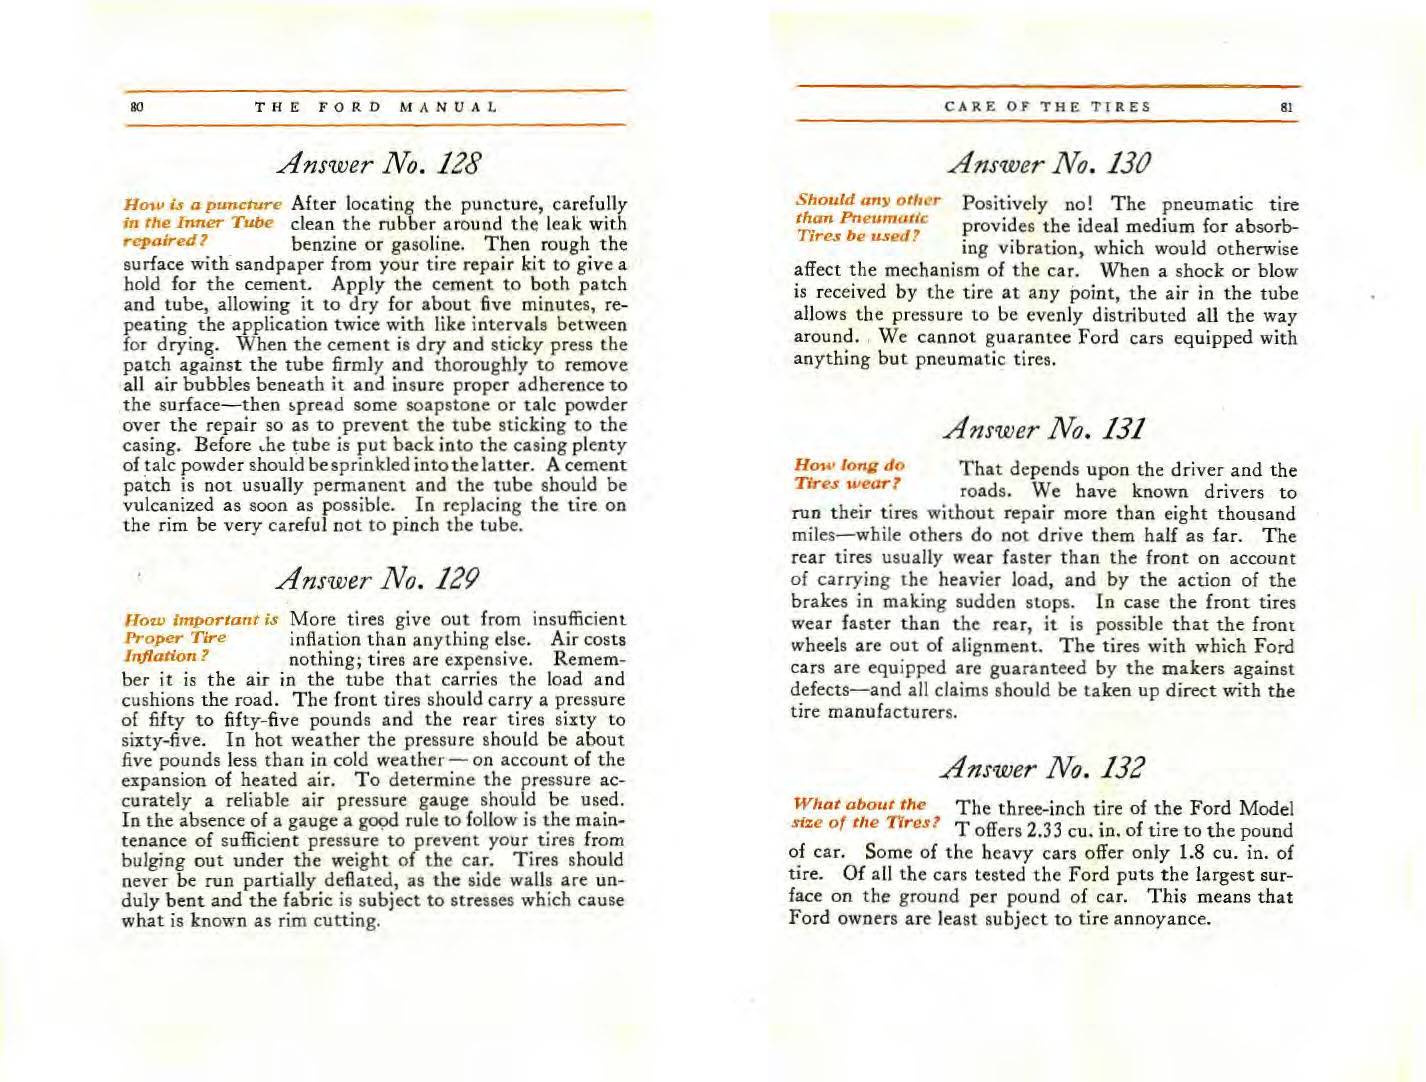 n_1915 Ford Owners Manual-80-81.jpg